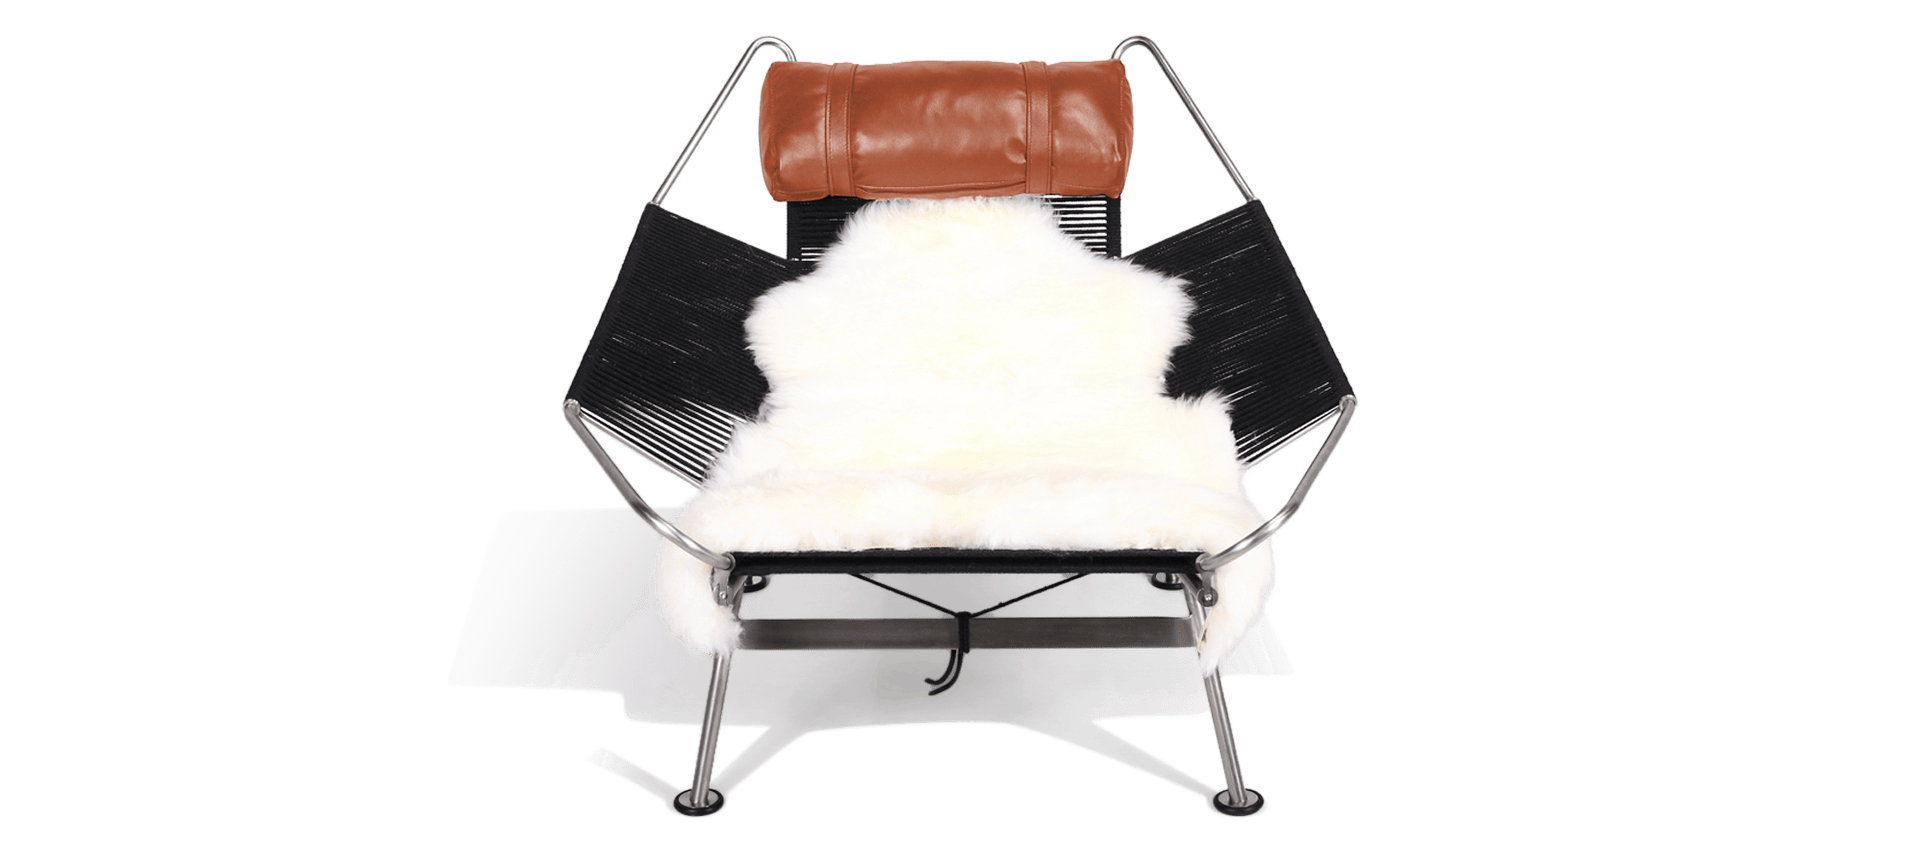 flag halyard chair brushed steel tan 02